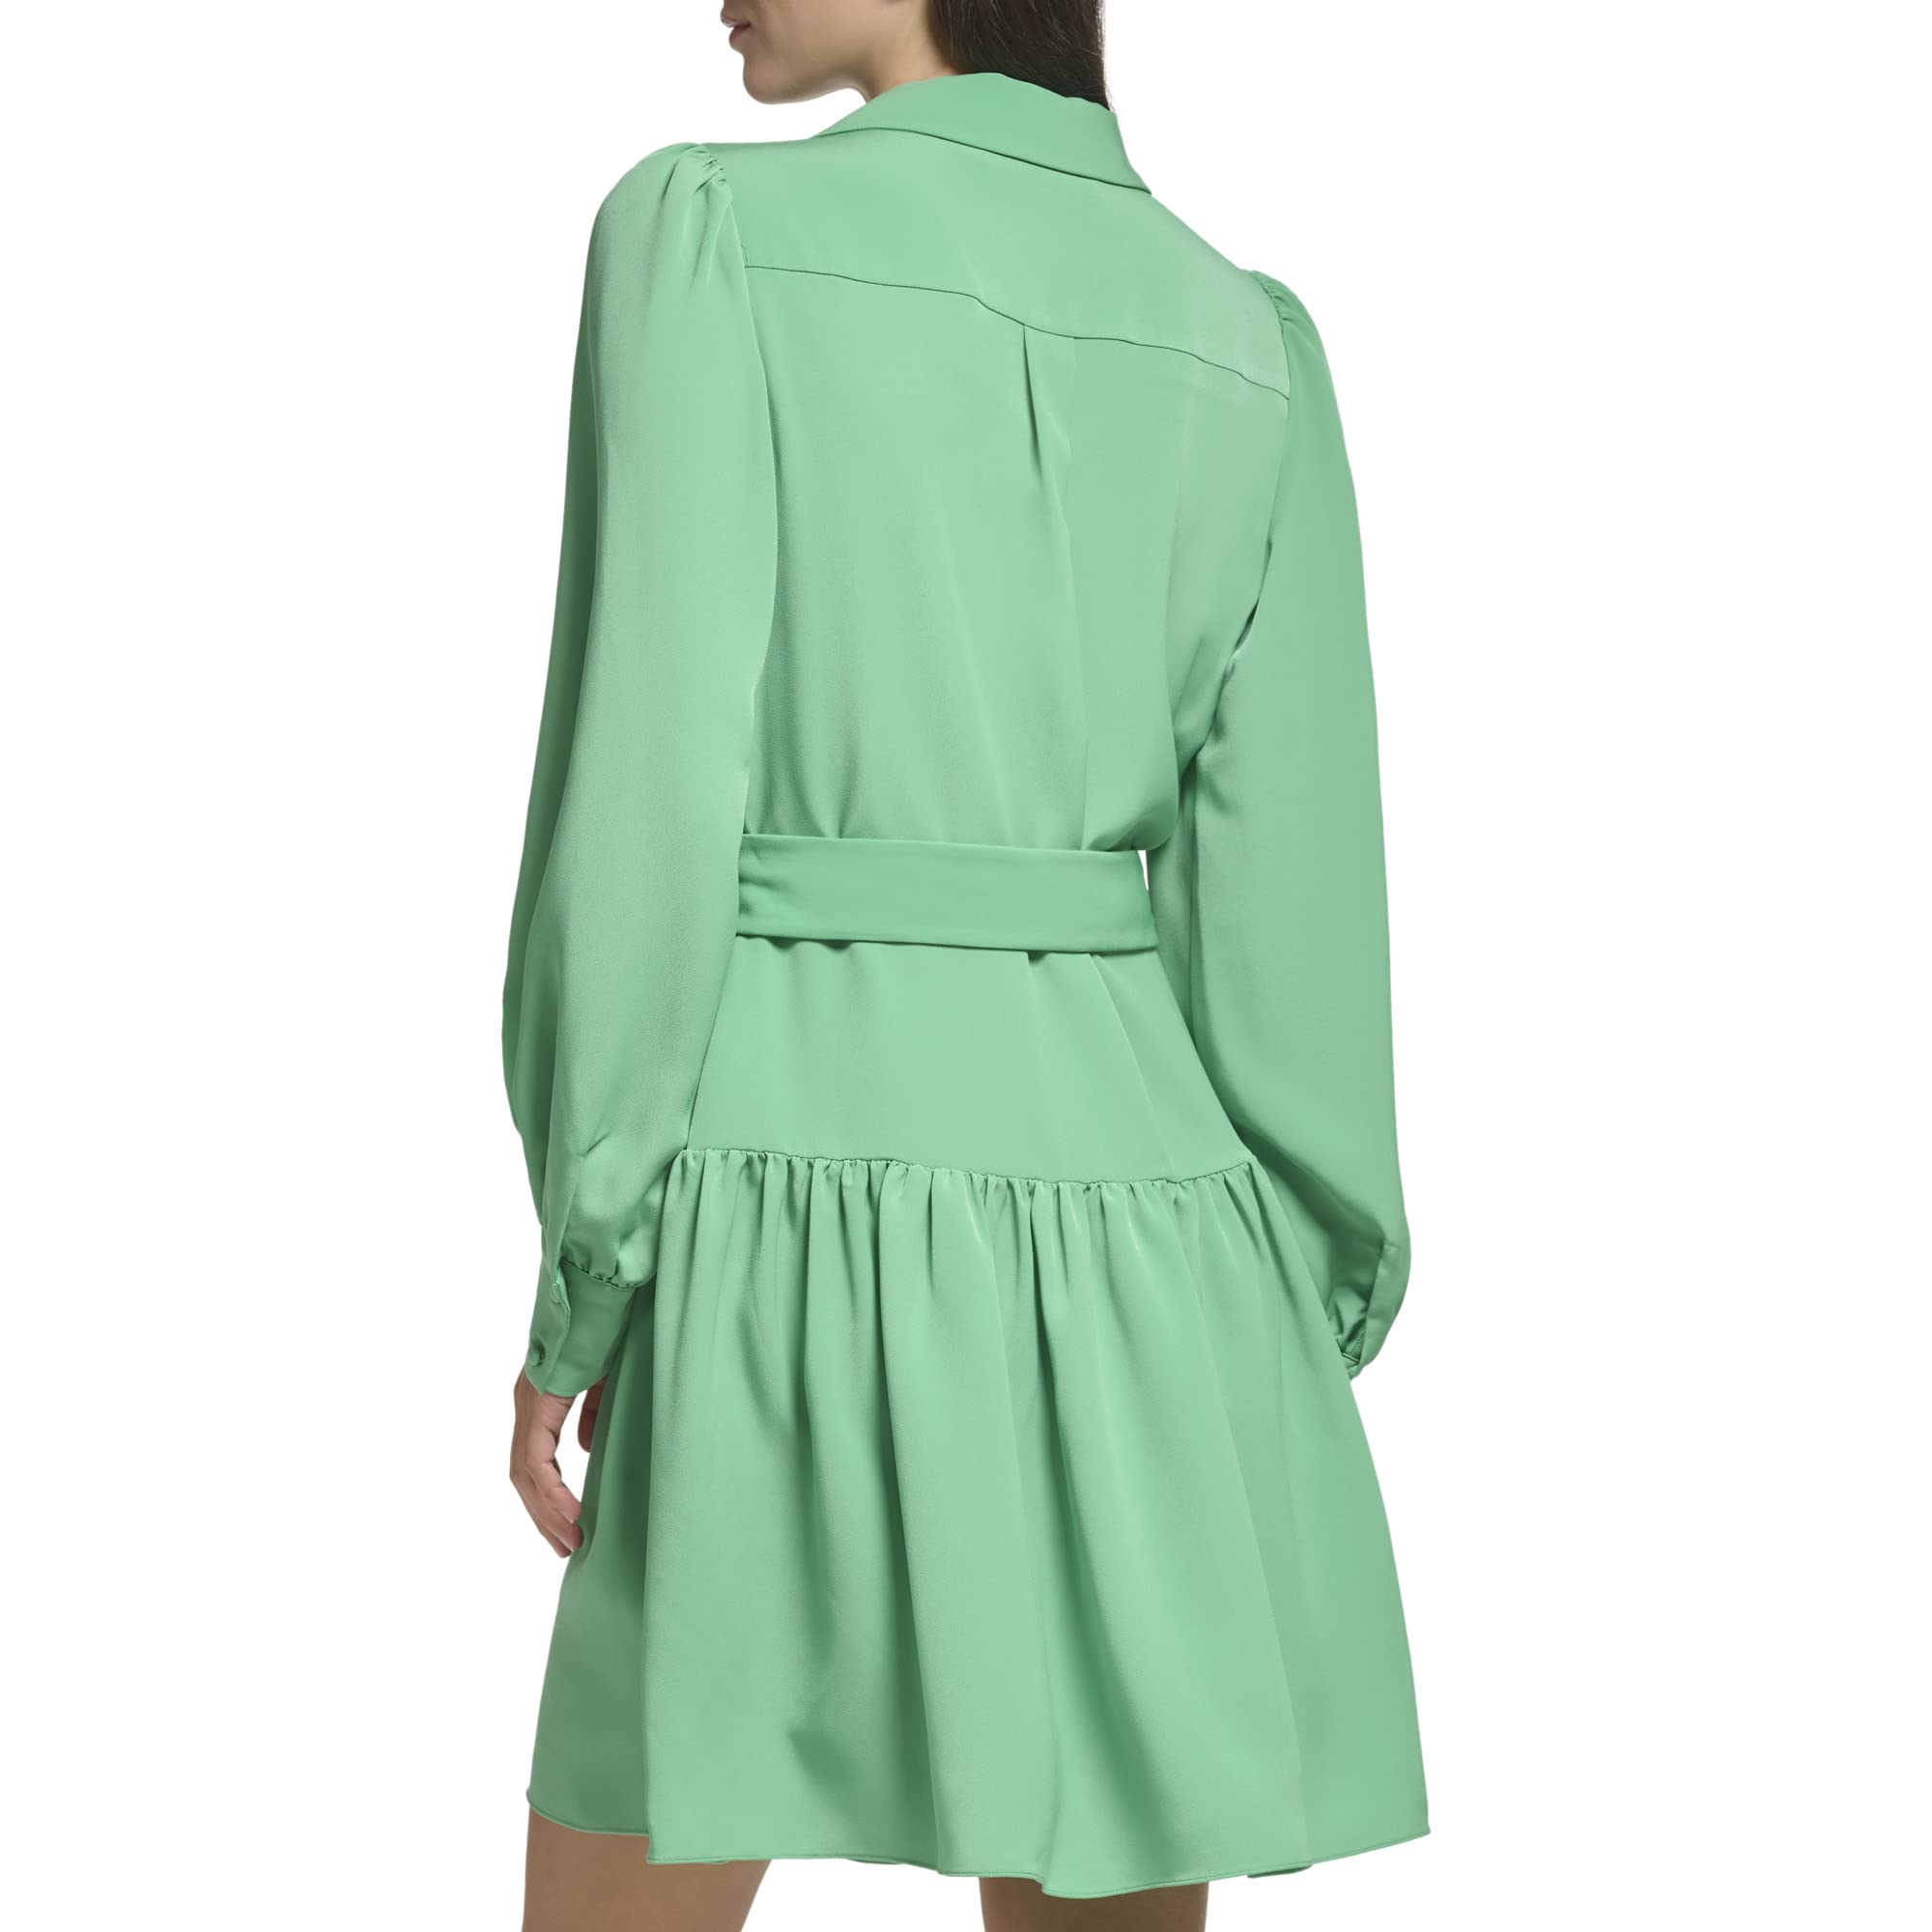 Karl Lagerfeld Paris Women's Belted Collar Front Zip Dress